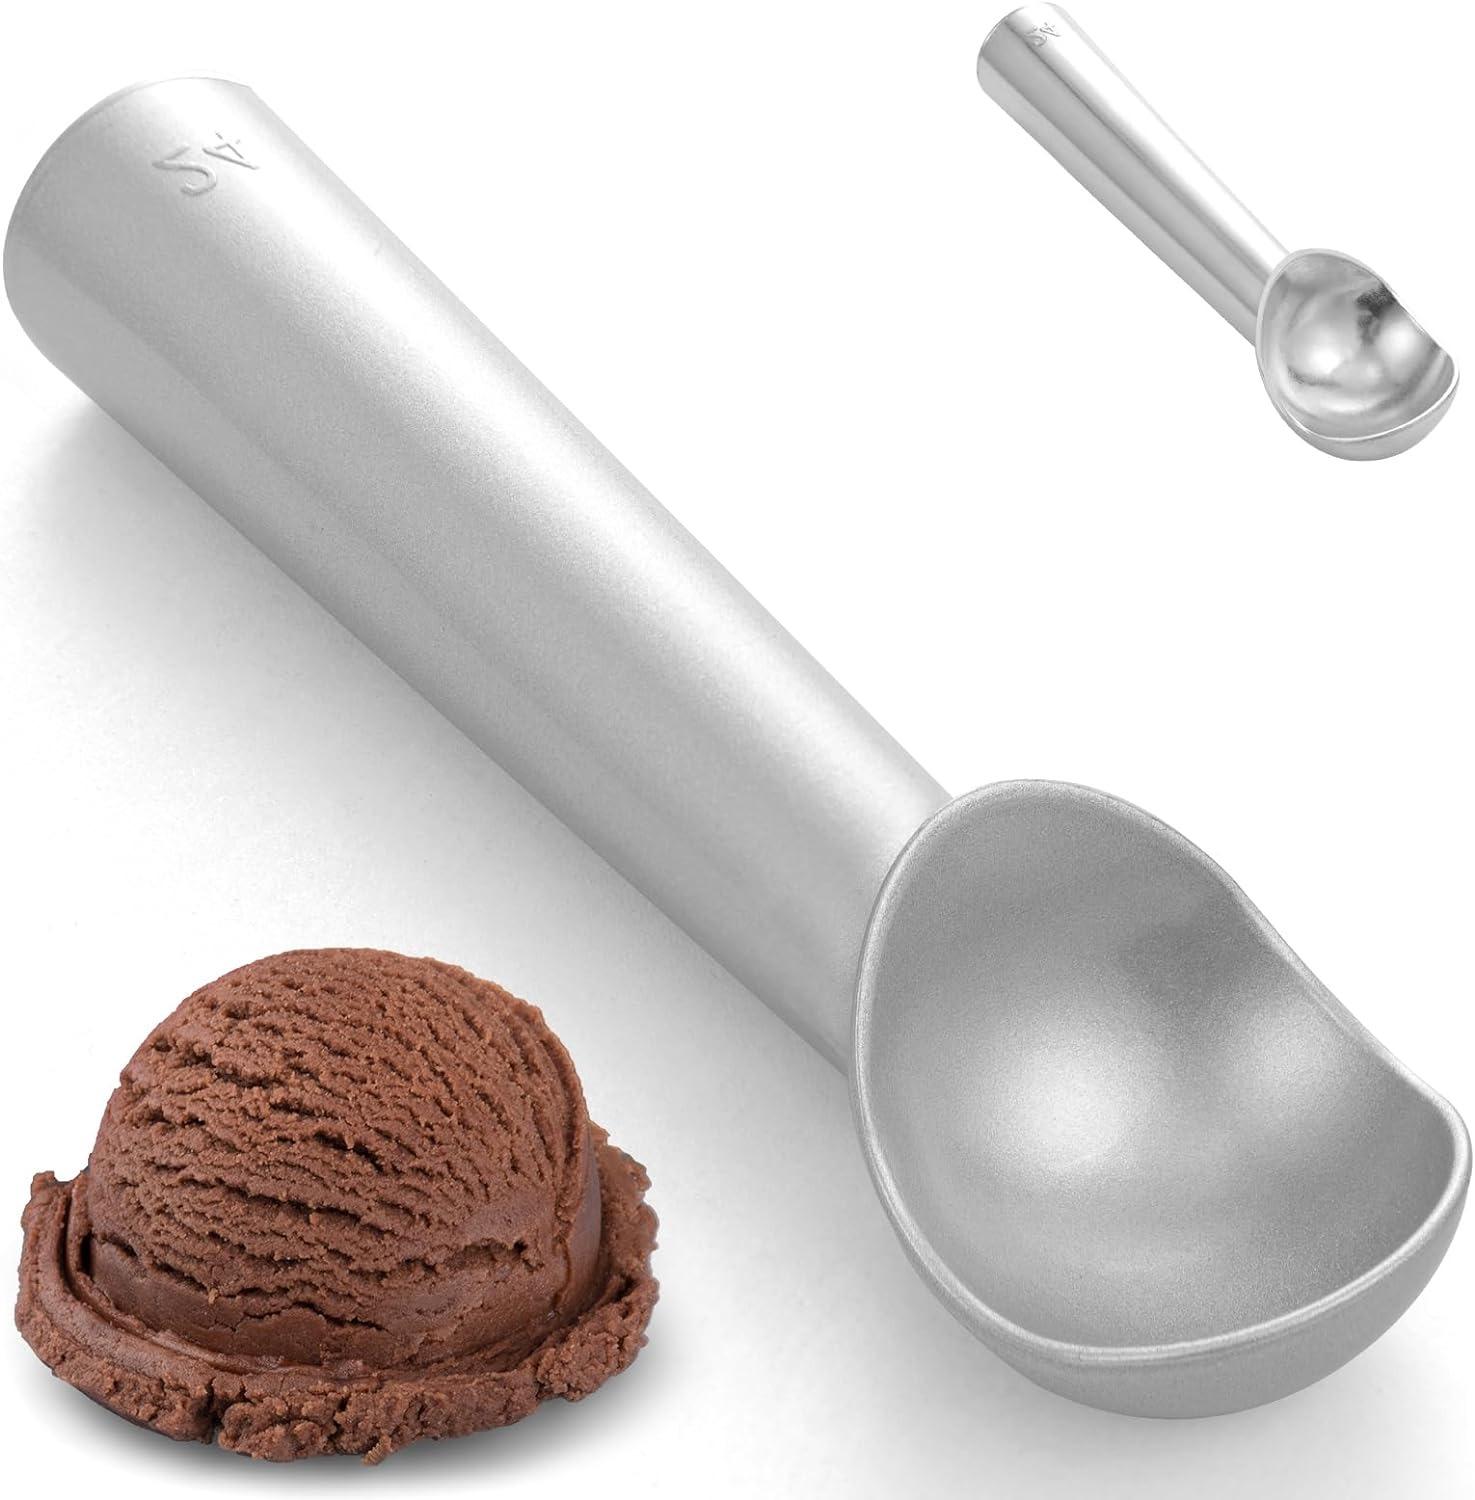 7 Inch Ice Cream Scoop - Professional Metal Ice Cream Scooper - Easy to Use & Cl